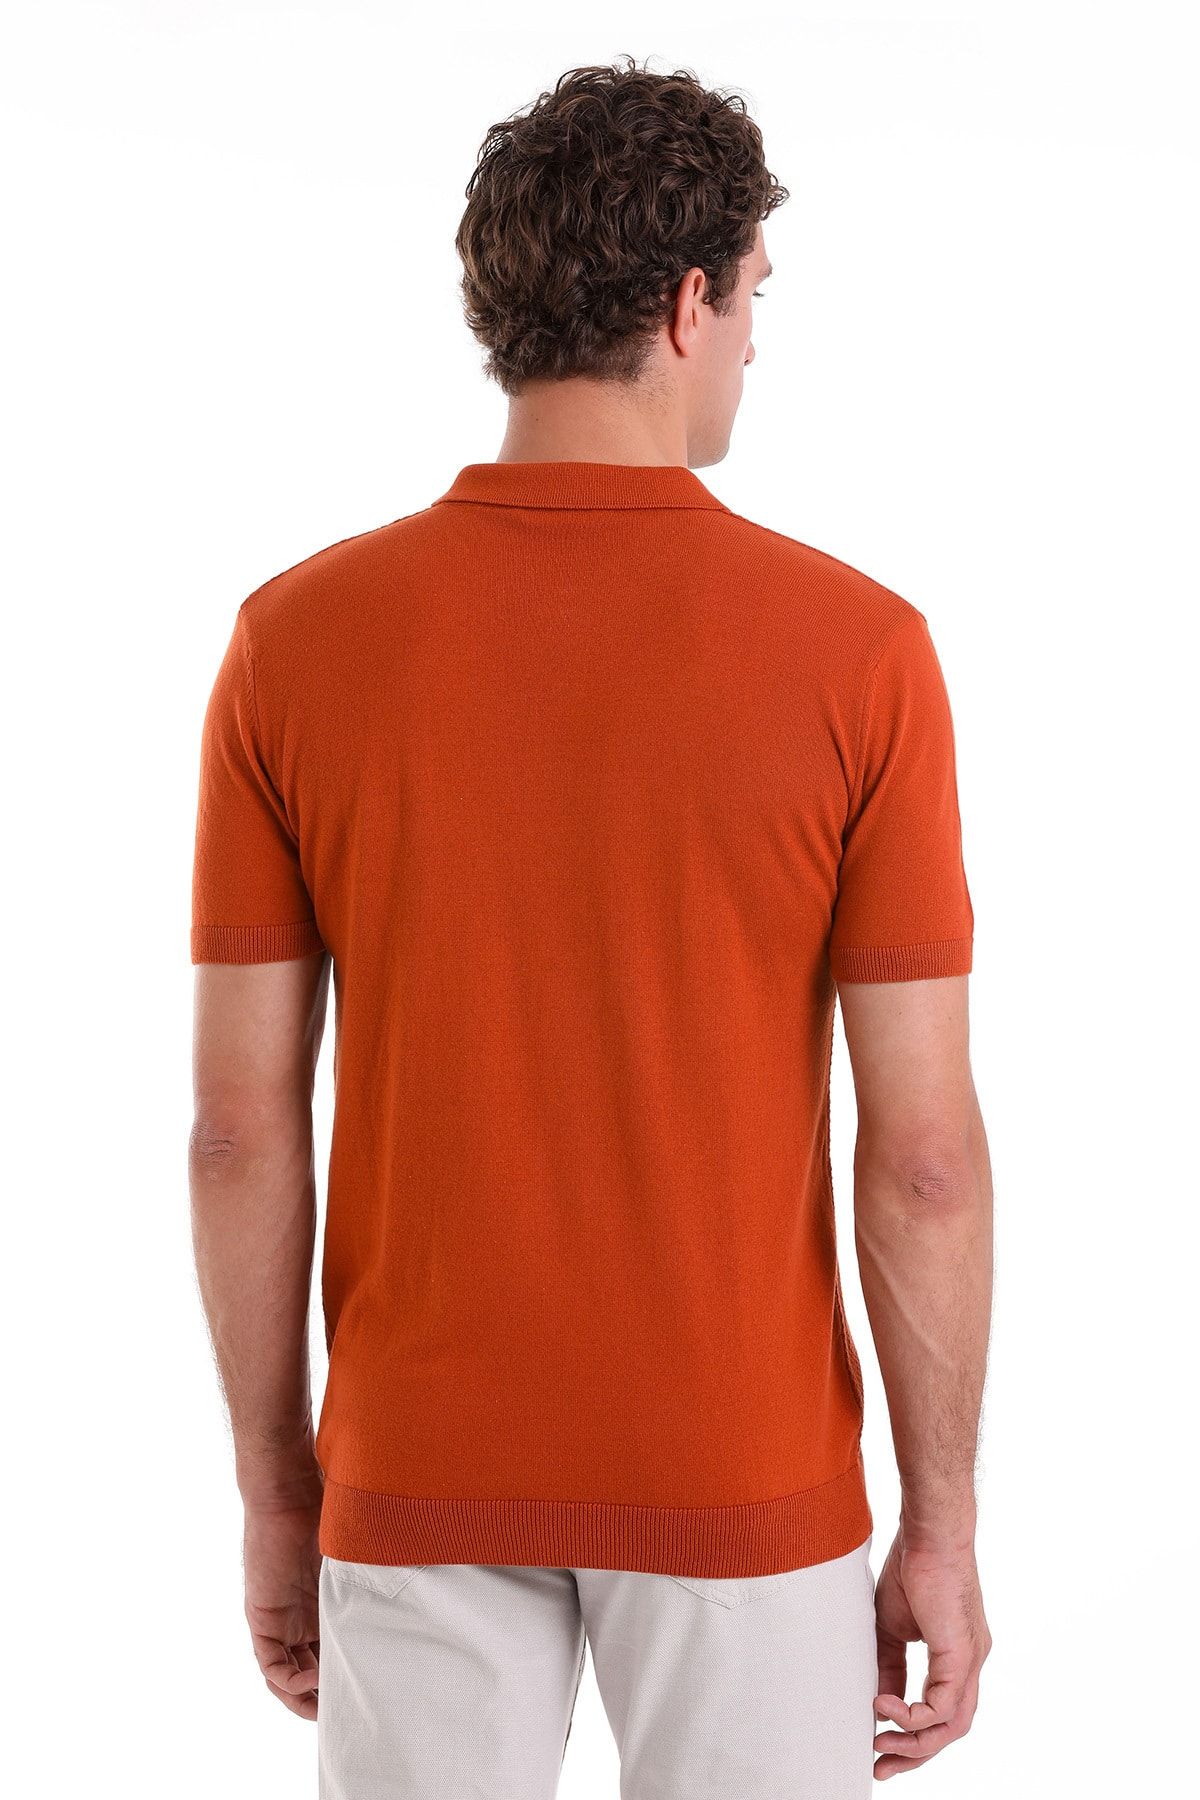 Hatemoğlu تی شرت بافتنی یقه پولو نخی ژاکارد با تناسب معمولی نارنجی